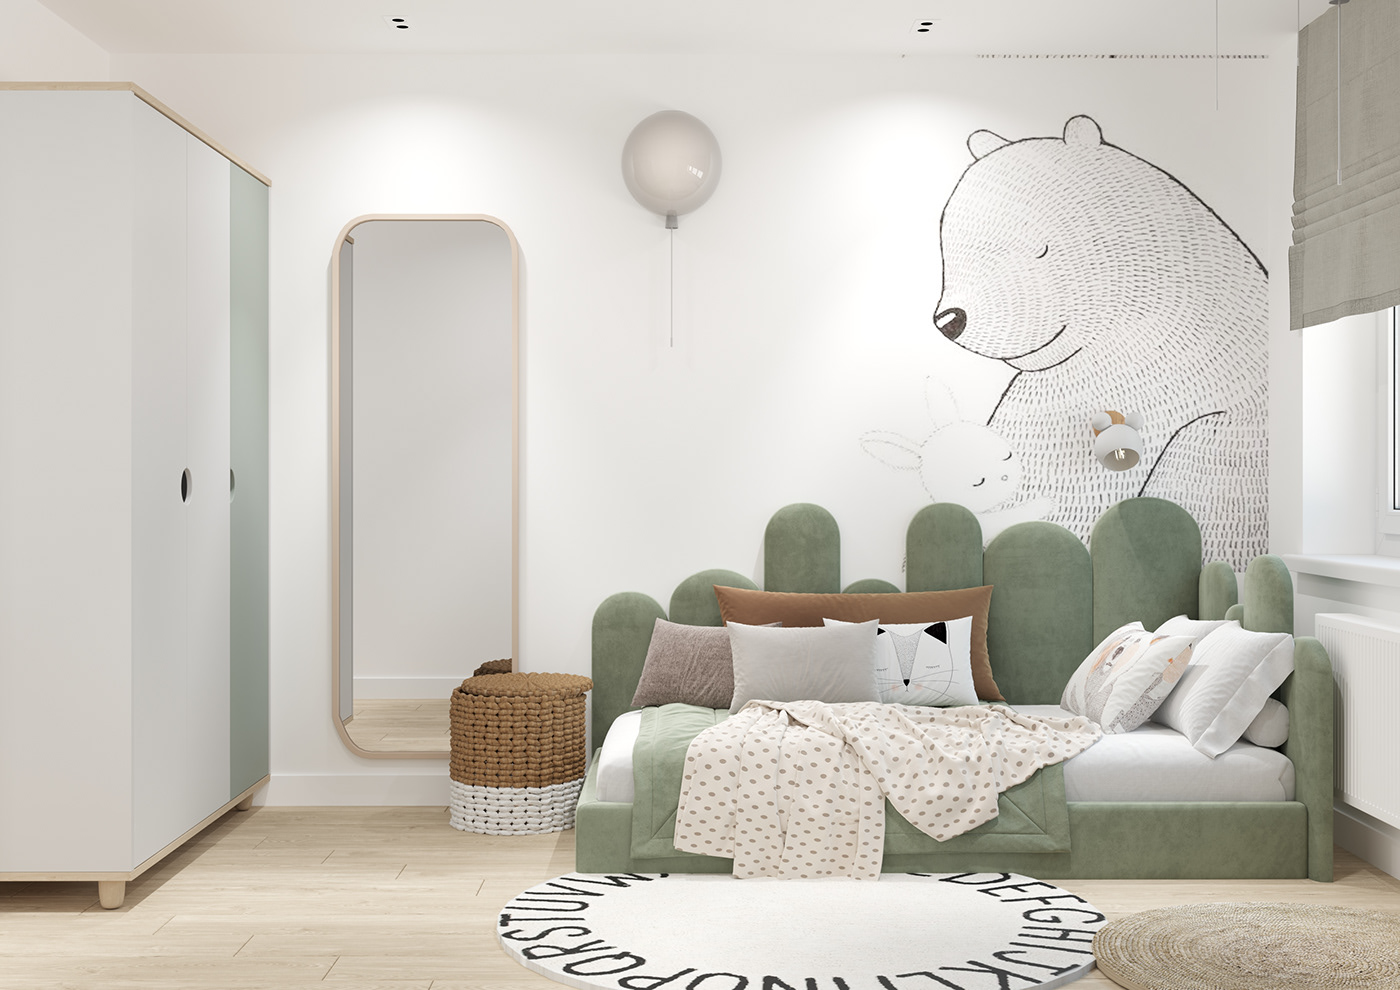 design interior дизайн интерьера интерьер визуализация 3ds max Render corona living room bedroom children room